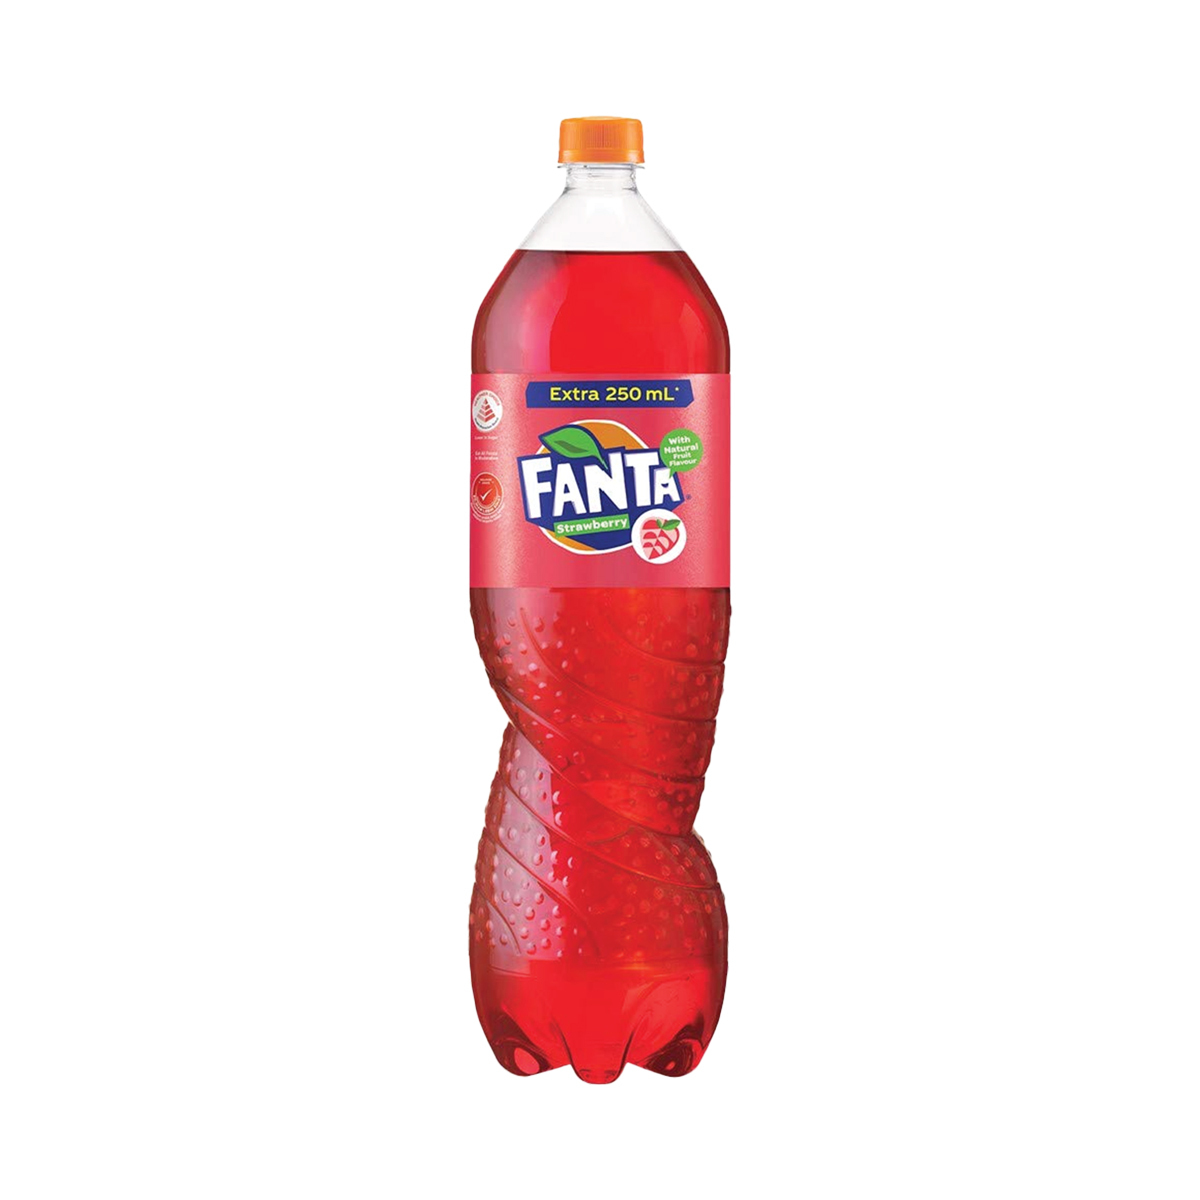 Fanta Strawberry Pet 1.75 Liter